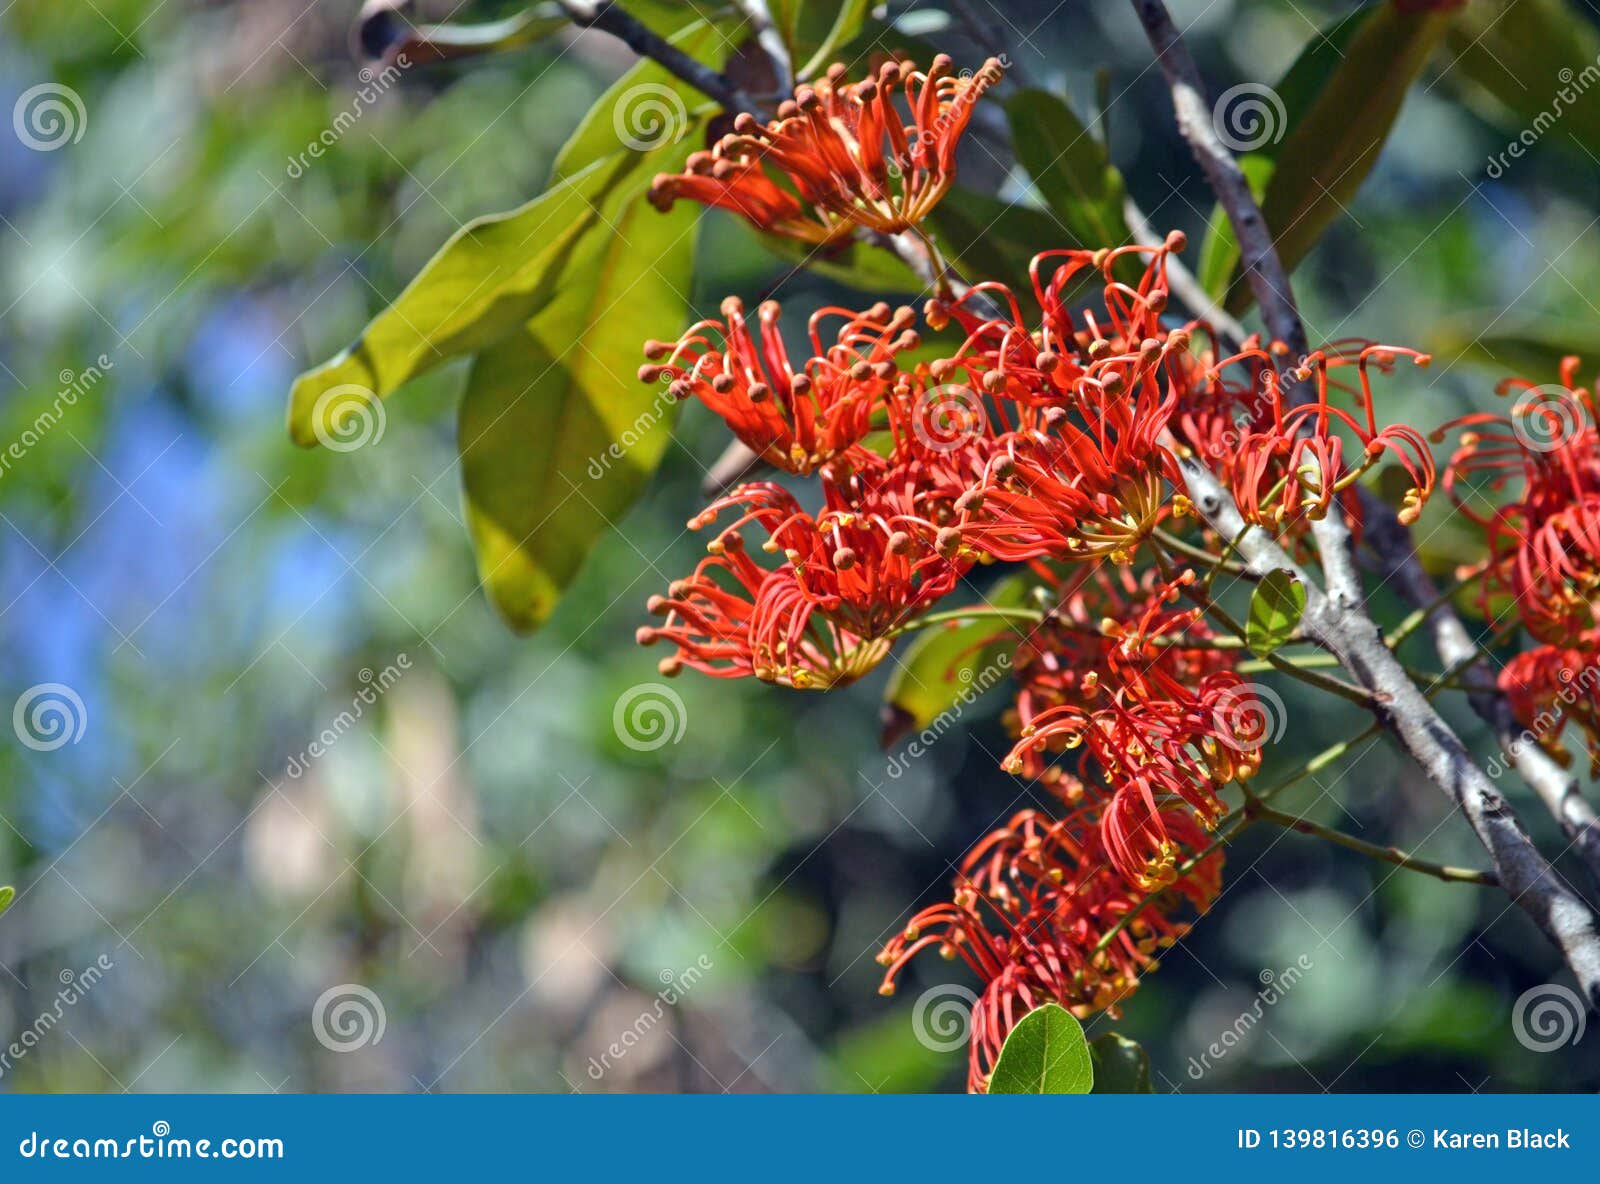  Orange  Flowers  Of The Australian  Native Firewheel Tree  